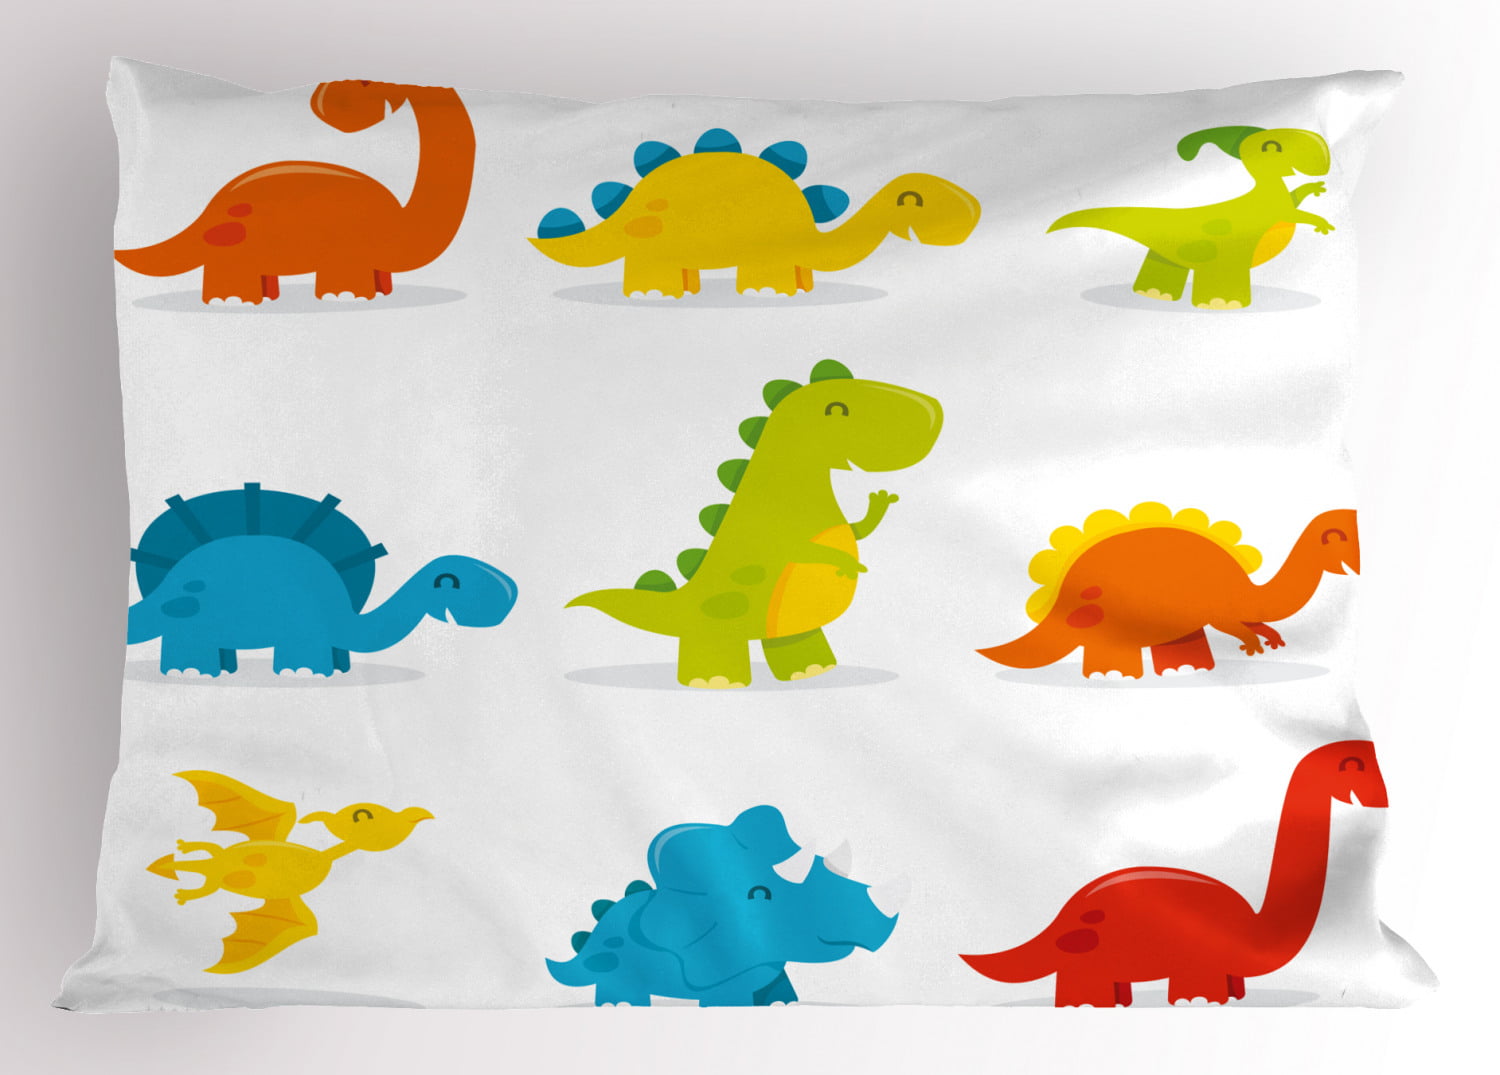 HOSNYE Dinosaur Throw Pillow Case Cushion Covers Seamless Colorful Cute Cartoon Animal Dinosaur Dragon Pattern Cotton Linen for Couch Bed Sofa Car Waist 18 x 18 inch 